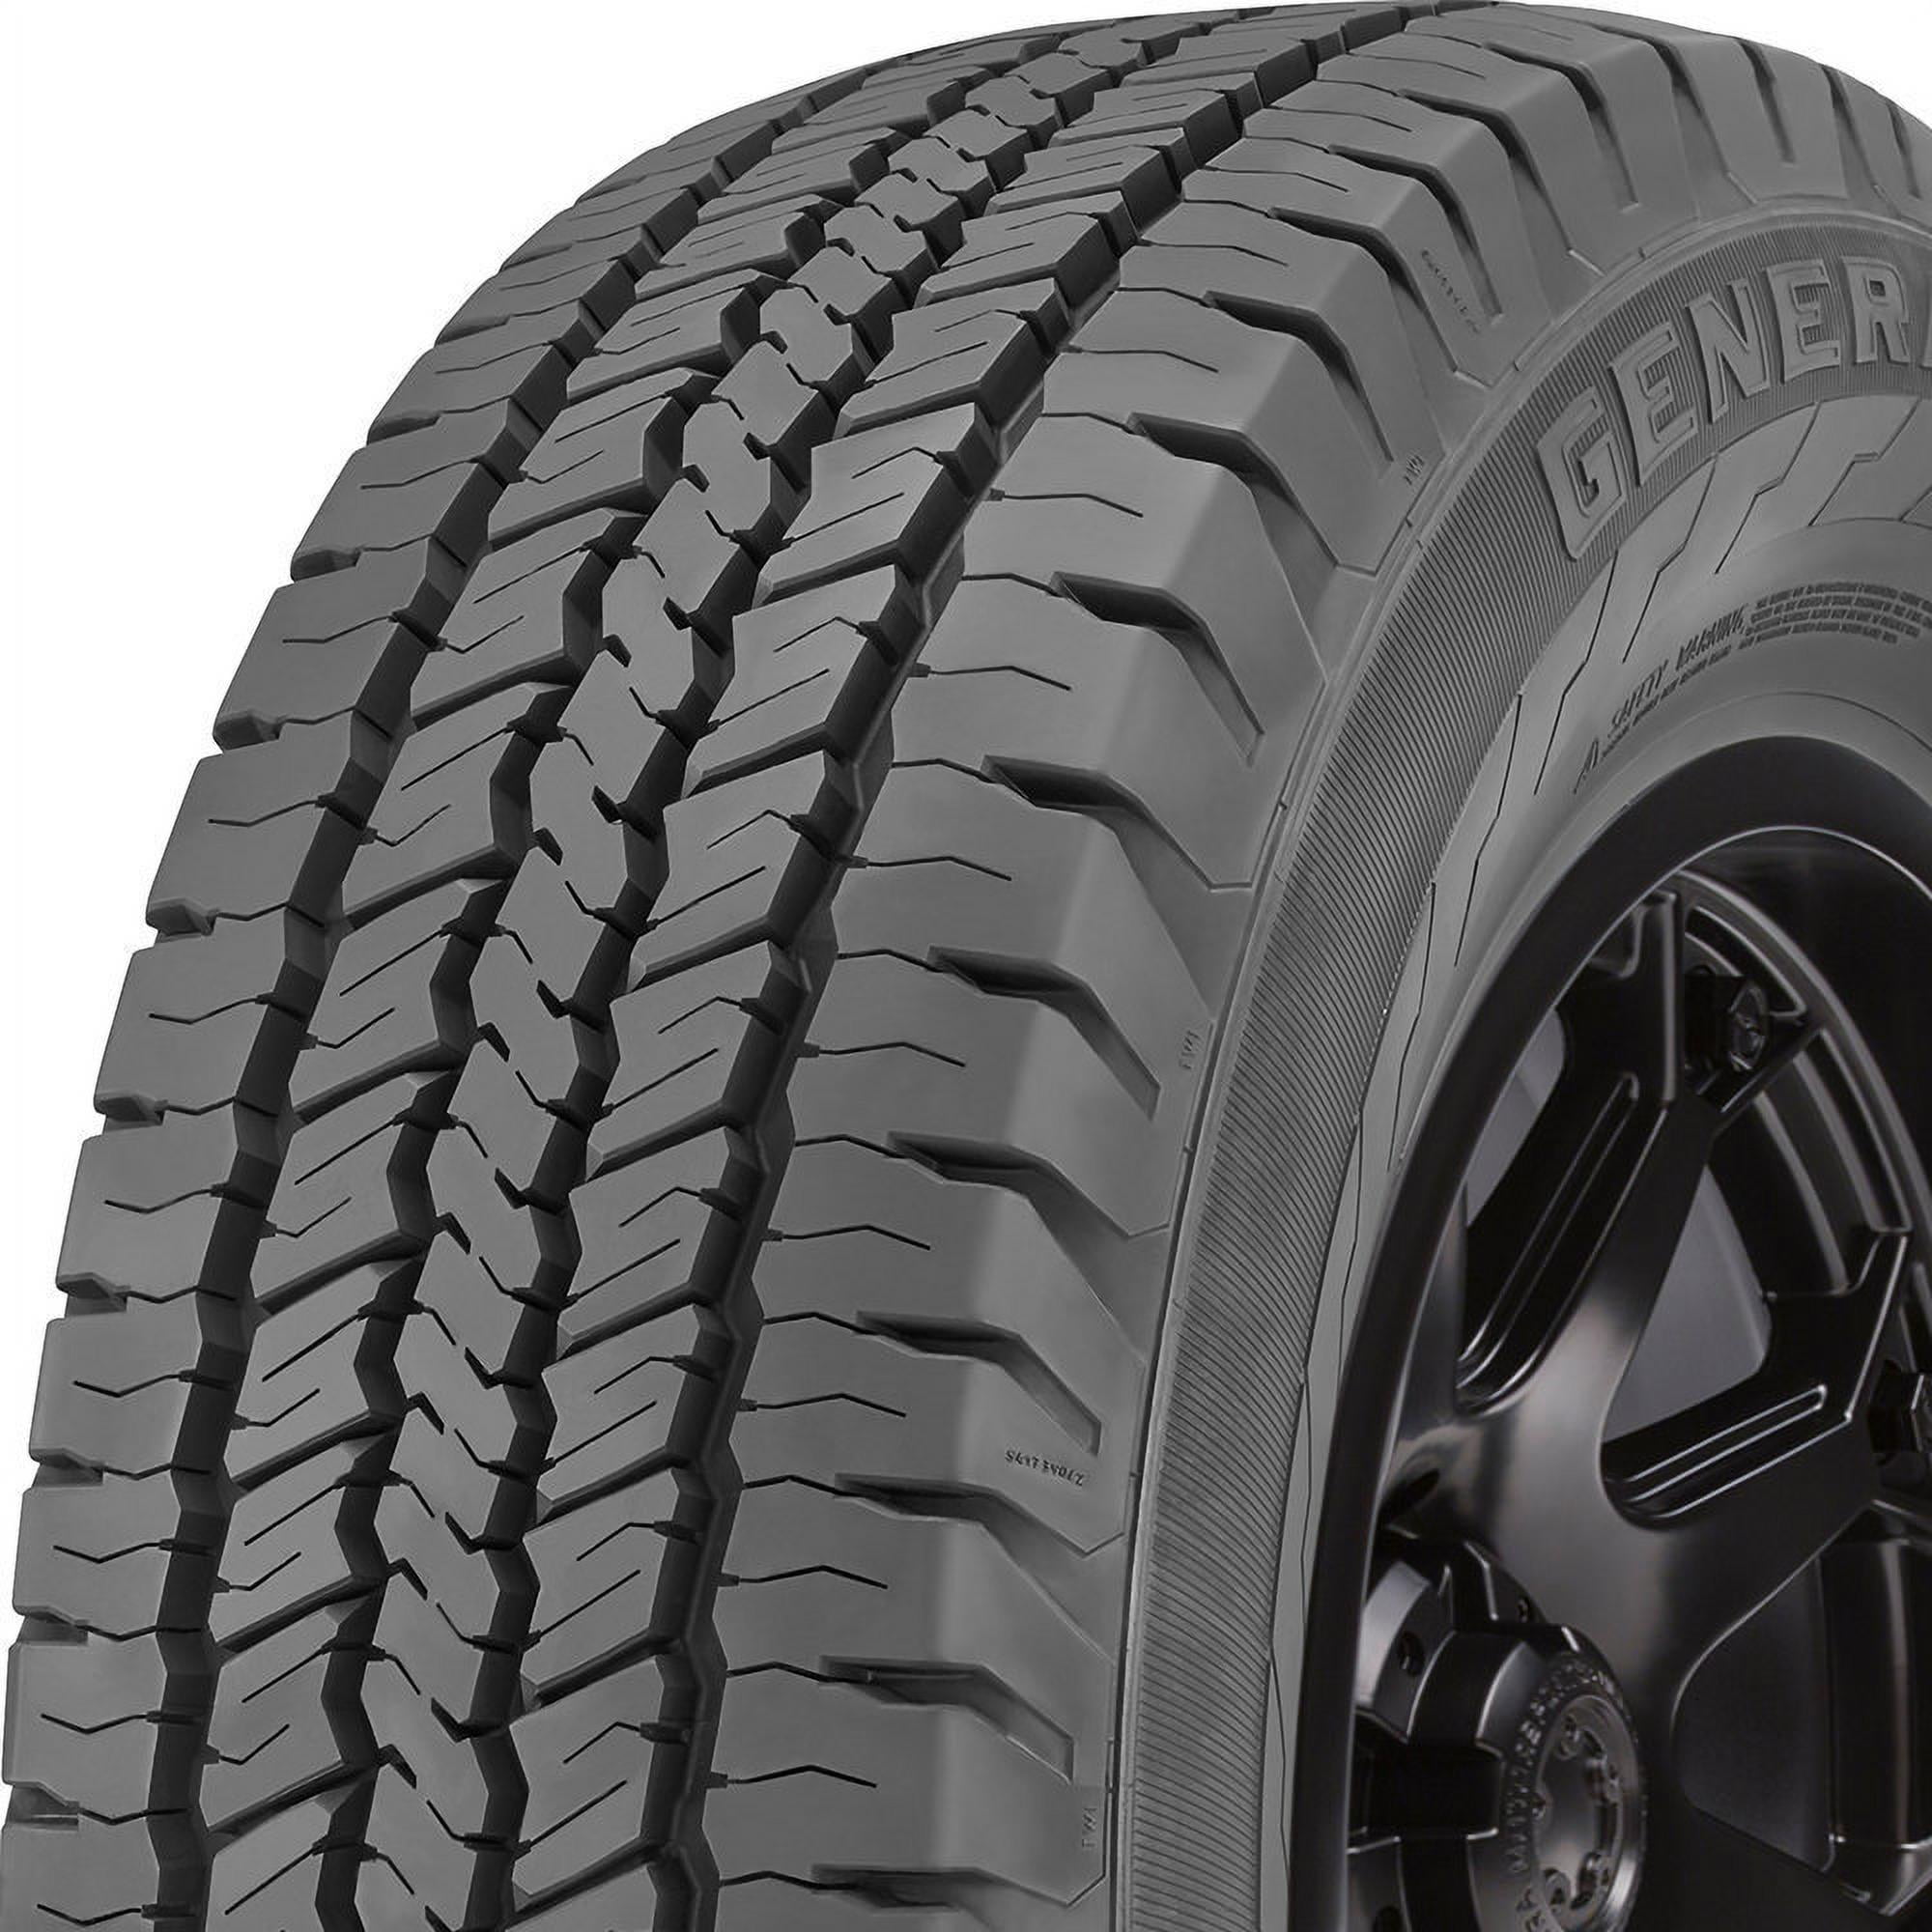 245/75R16 120S General Grabber AT/X All-Terrain Radial Tire 